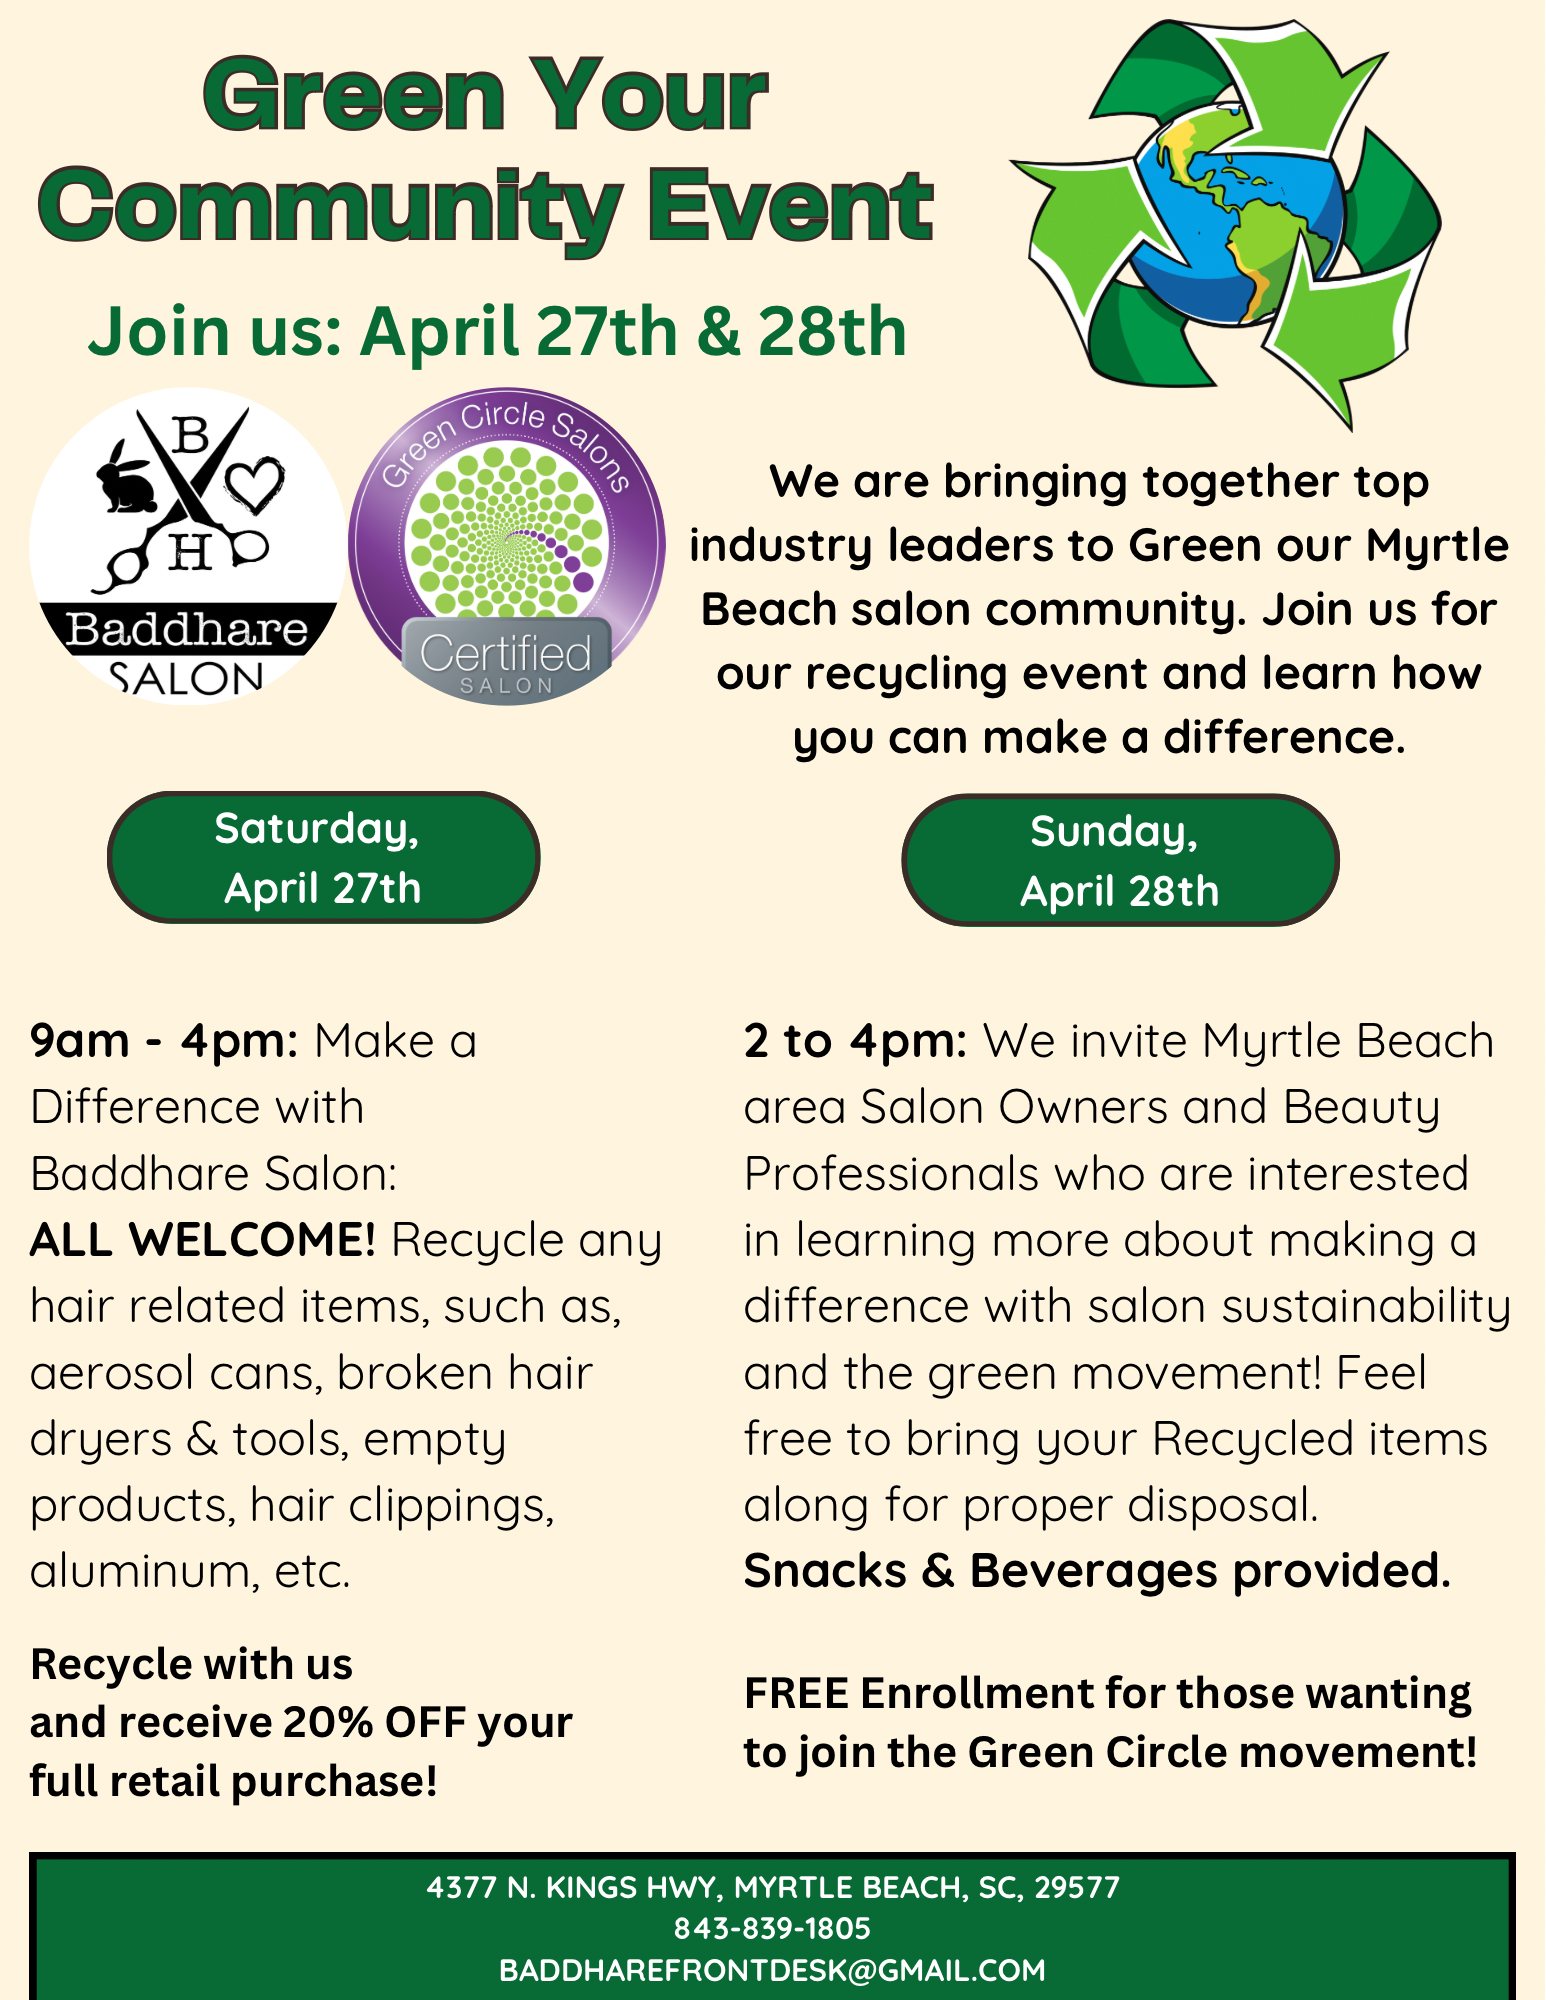 Baddhare Salon Announces Green Your Community Event